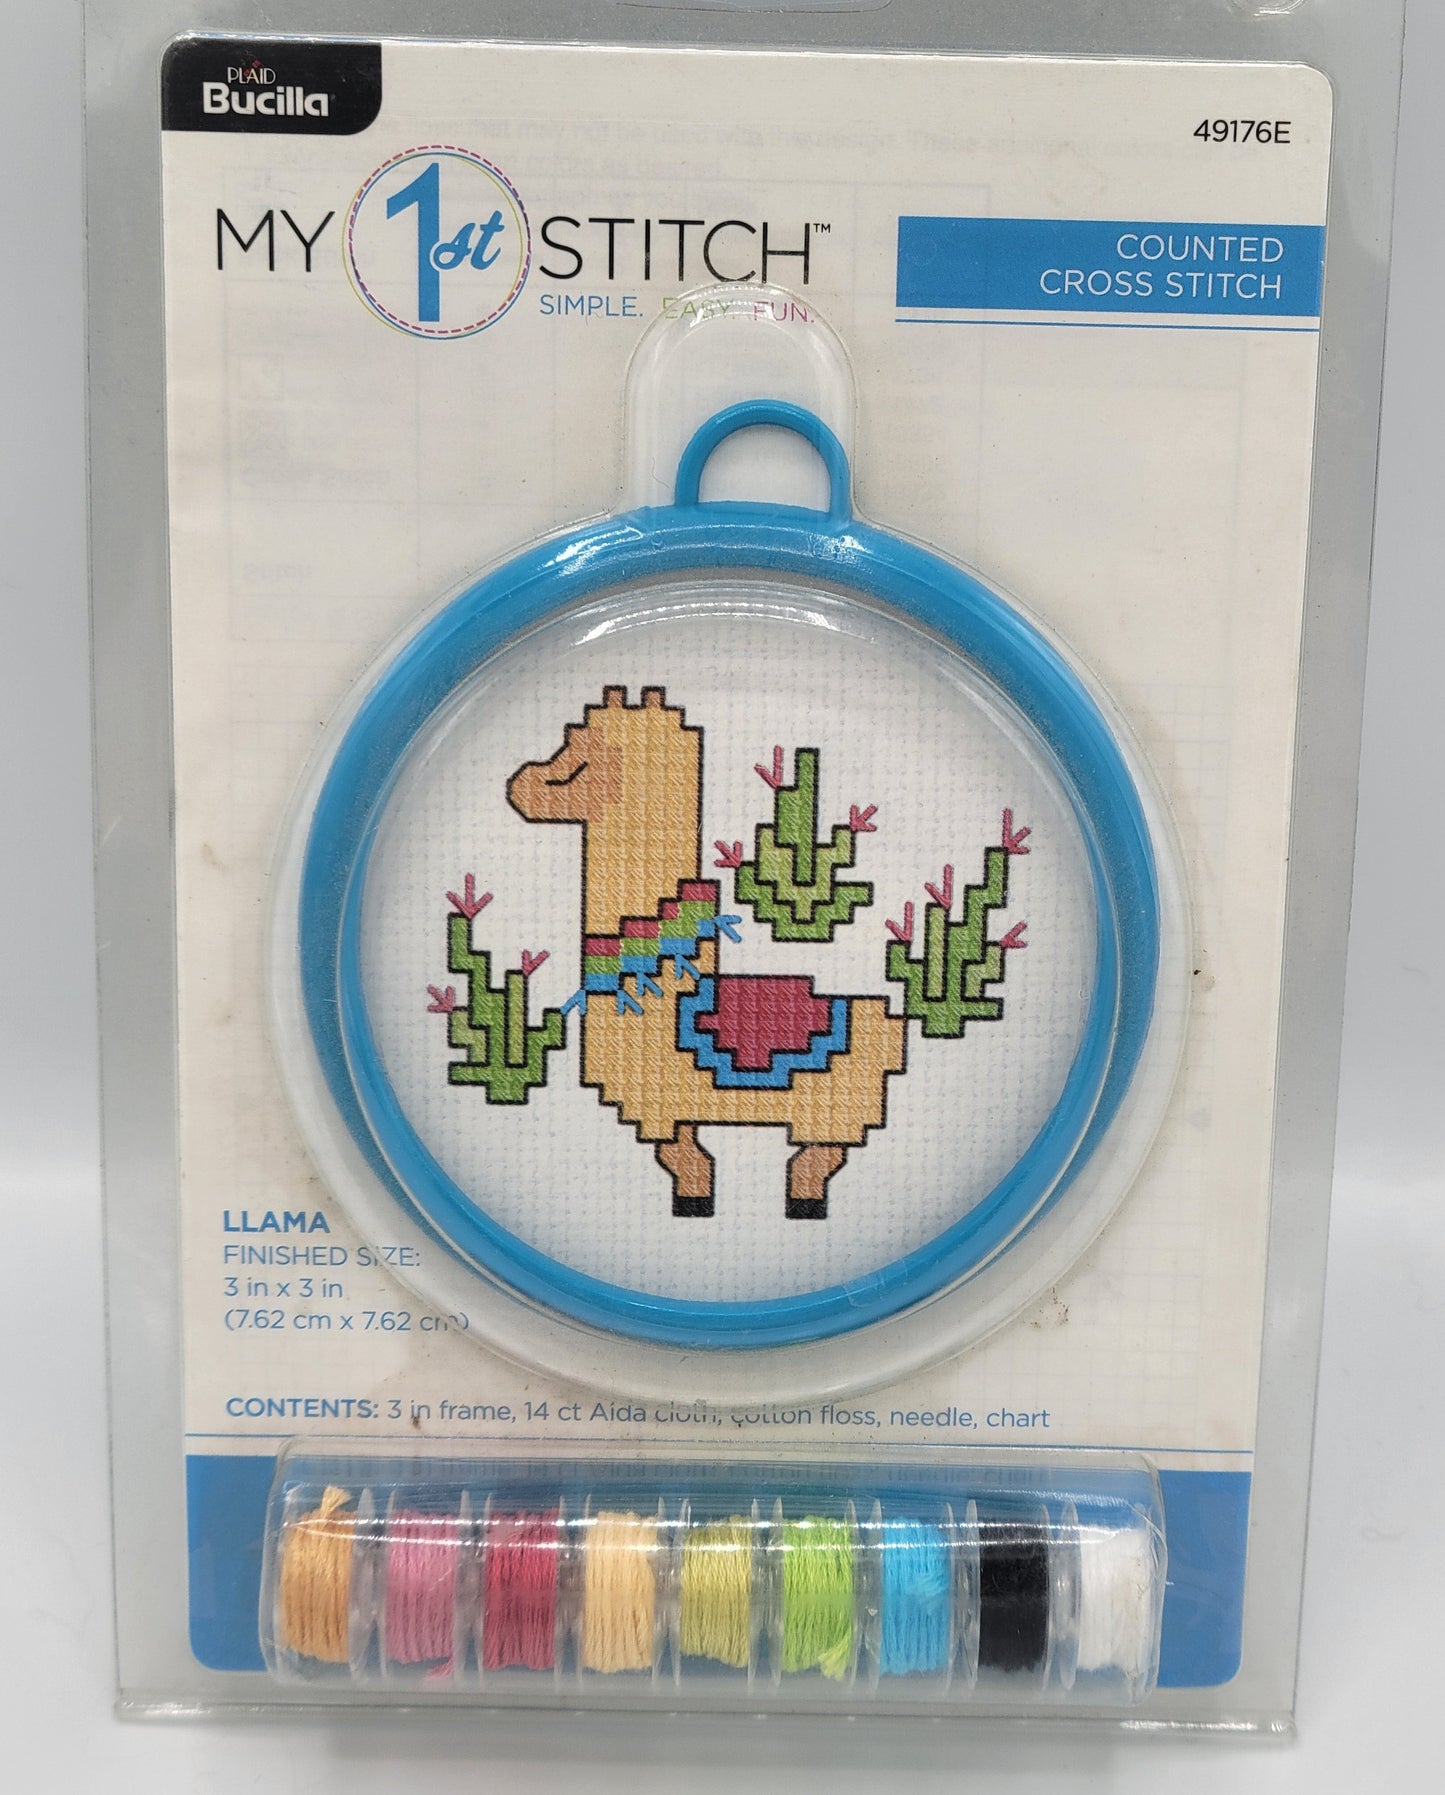 My First Stitch kit